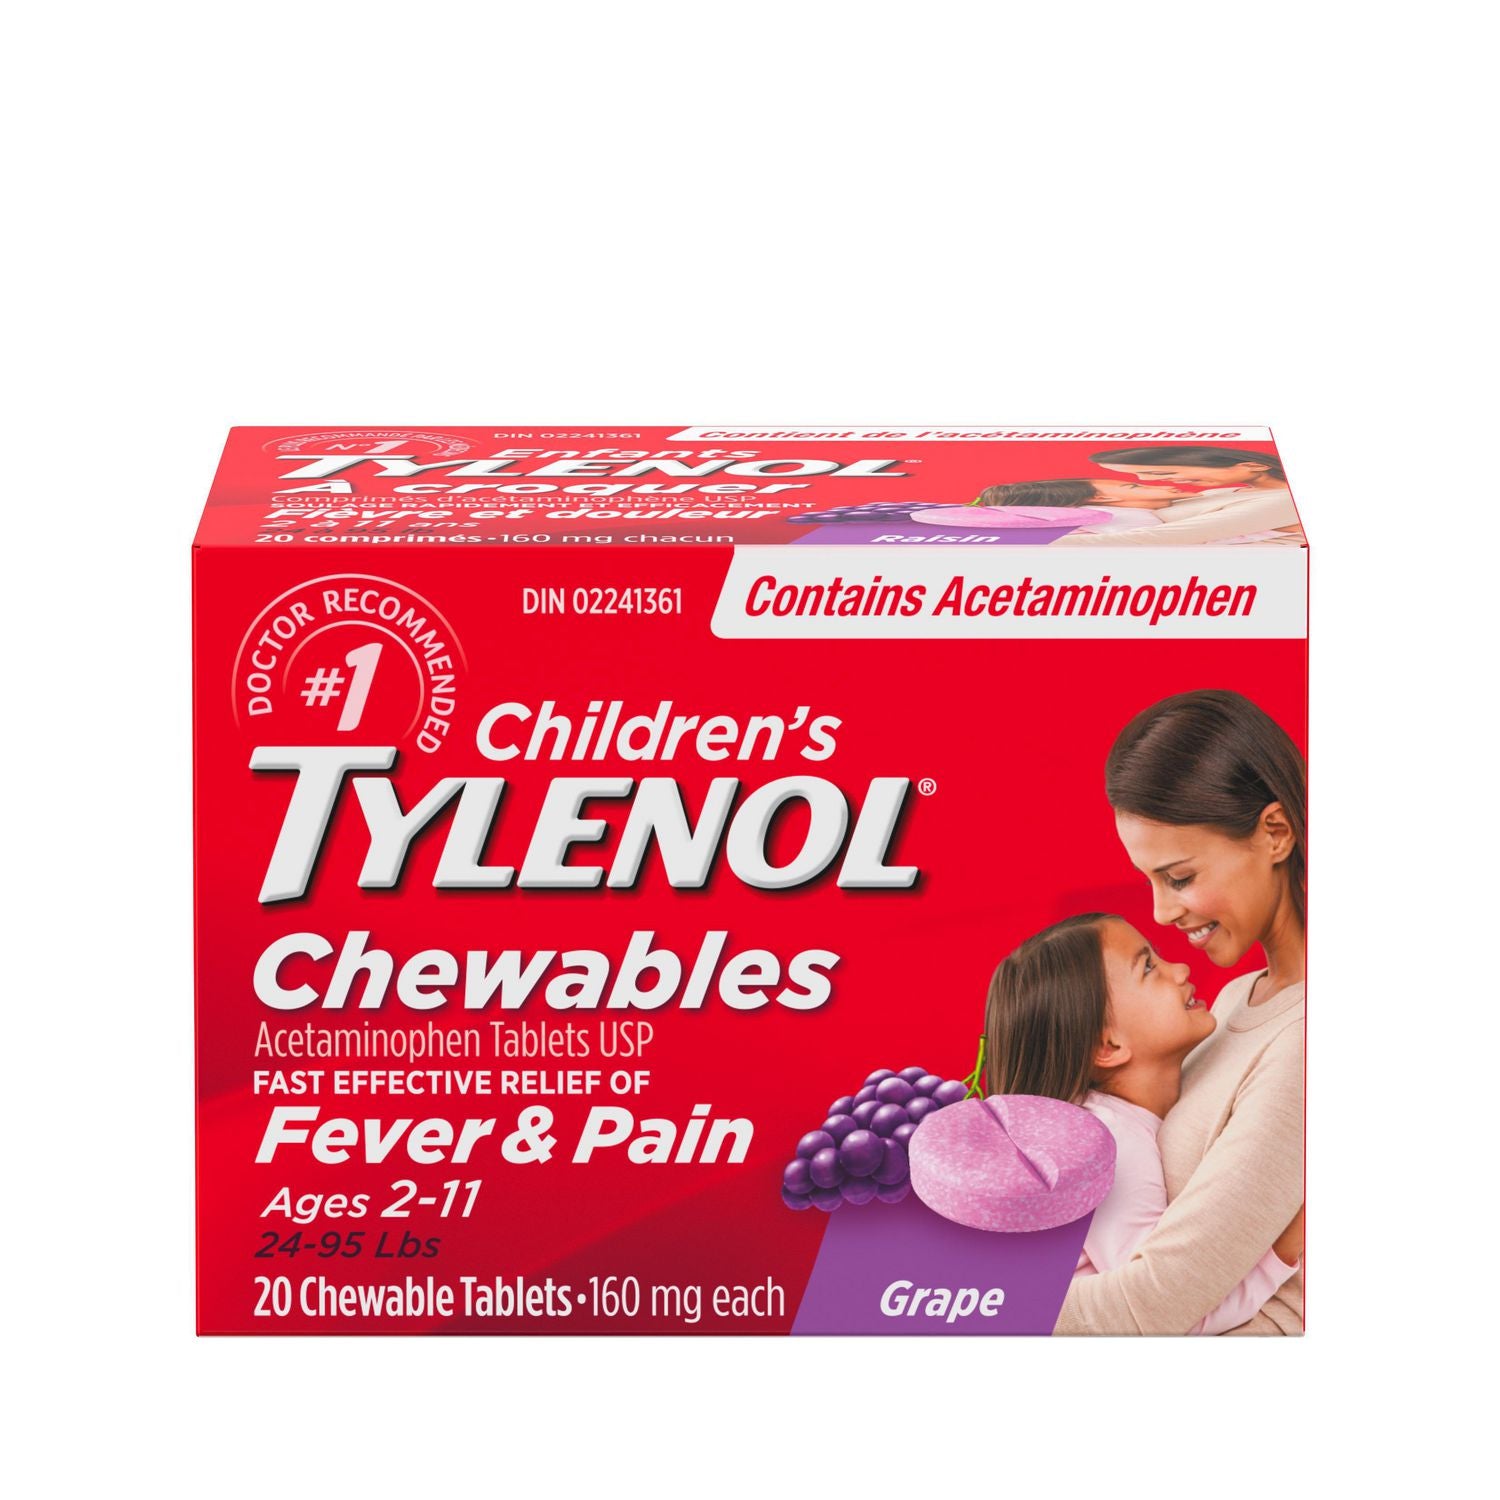 Tylenol Children's Medicine for Fever & Pain, Grape - 20 chewable tablets